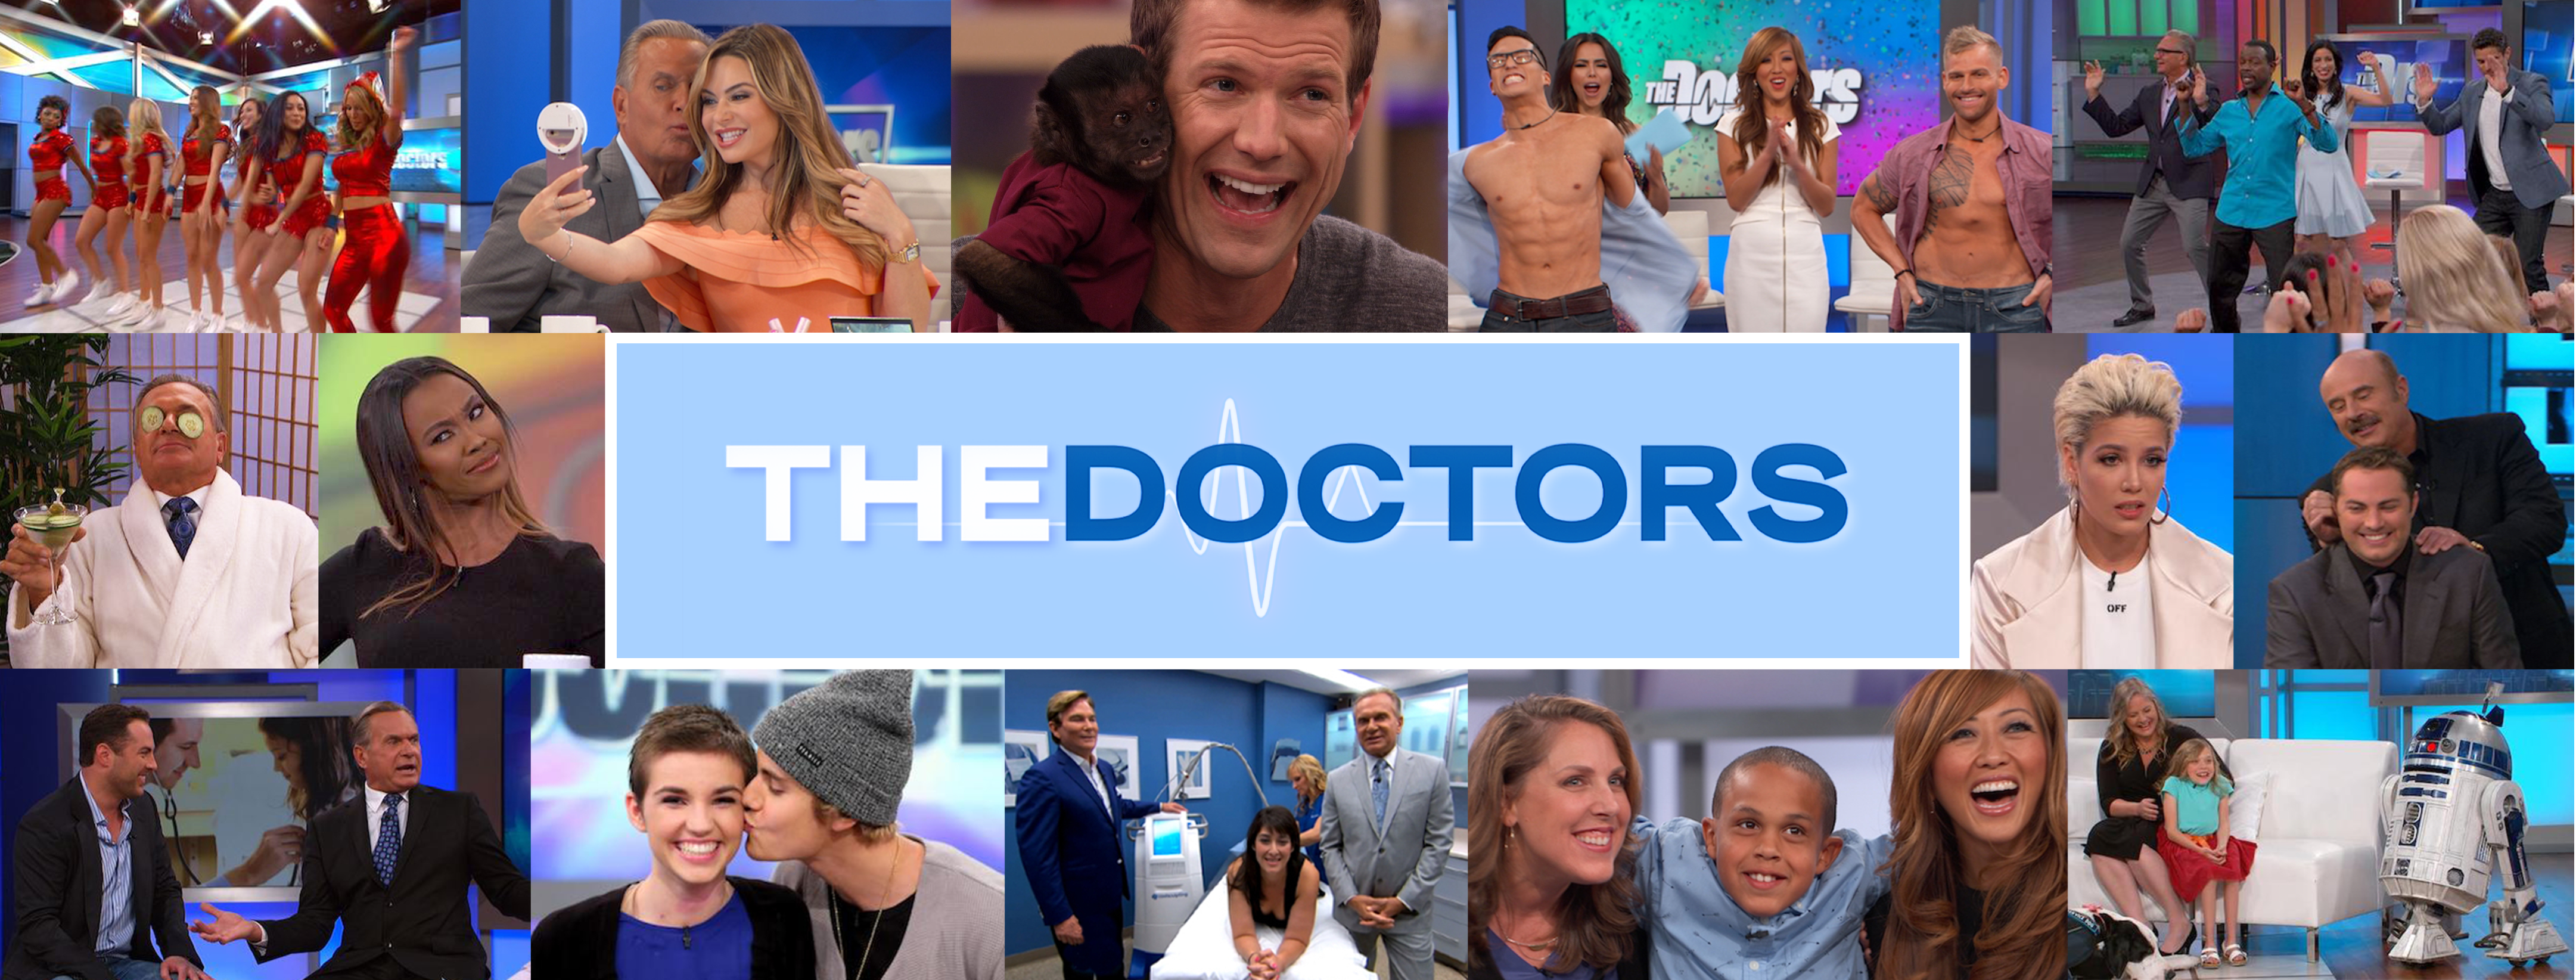 Dr Ordon S Blog Spider Veins The Doctors Tv Show